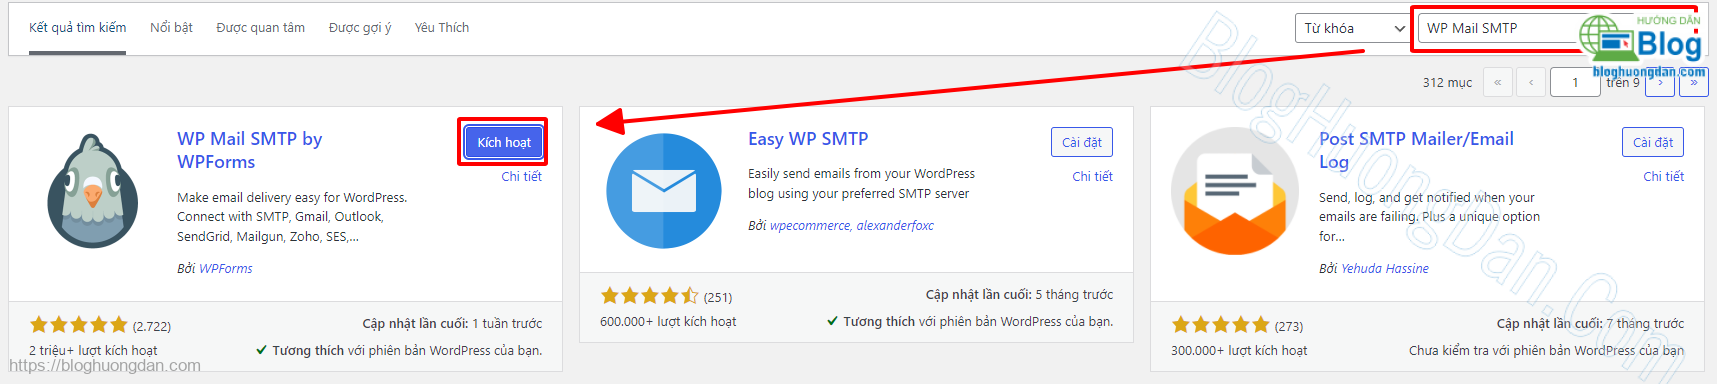 cấu hình gửi mail trong wordpress với plugin wp mail smtp 2329